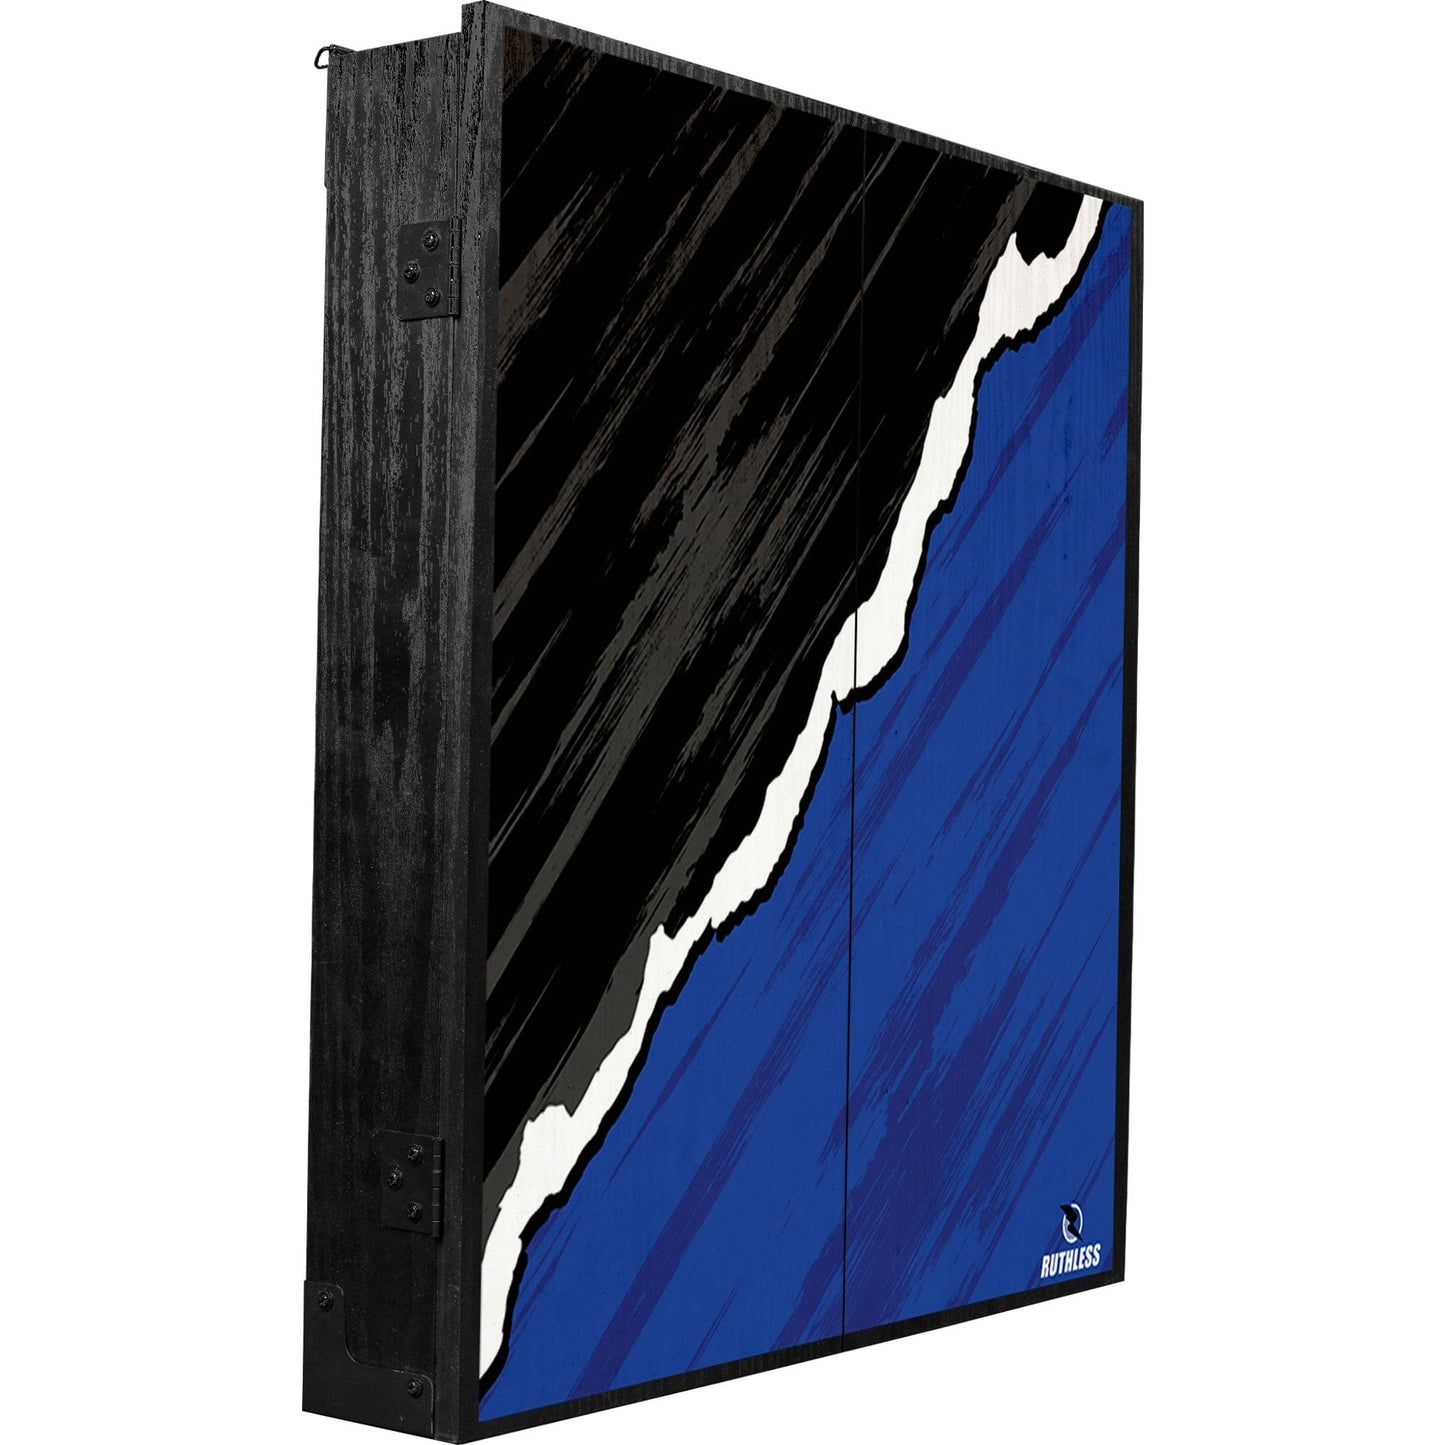 Ruthless Dartboard Cabinet - Square Design - RipTorn - Black & Blue